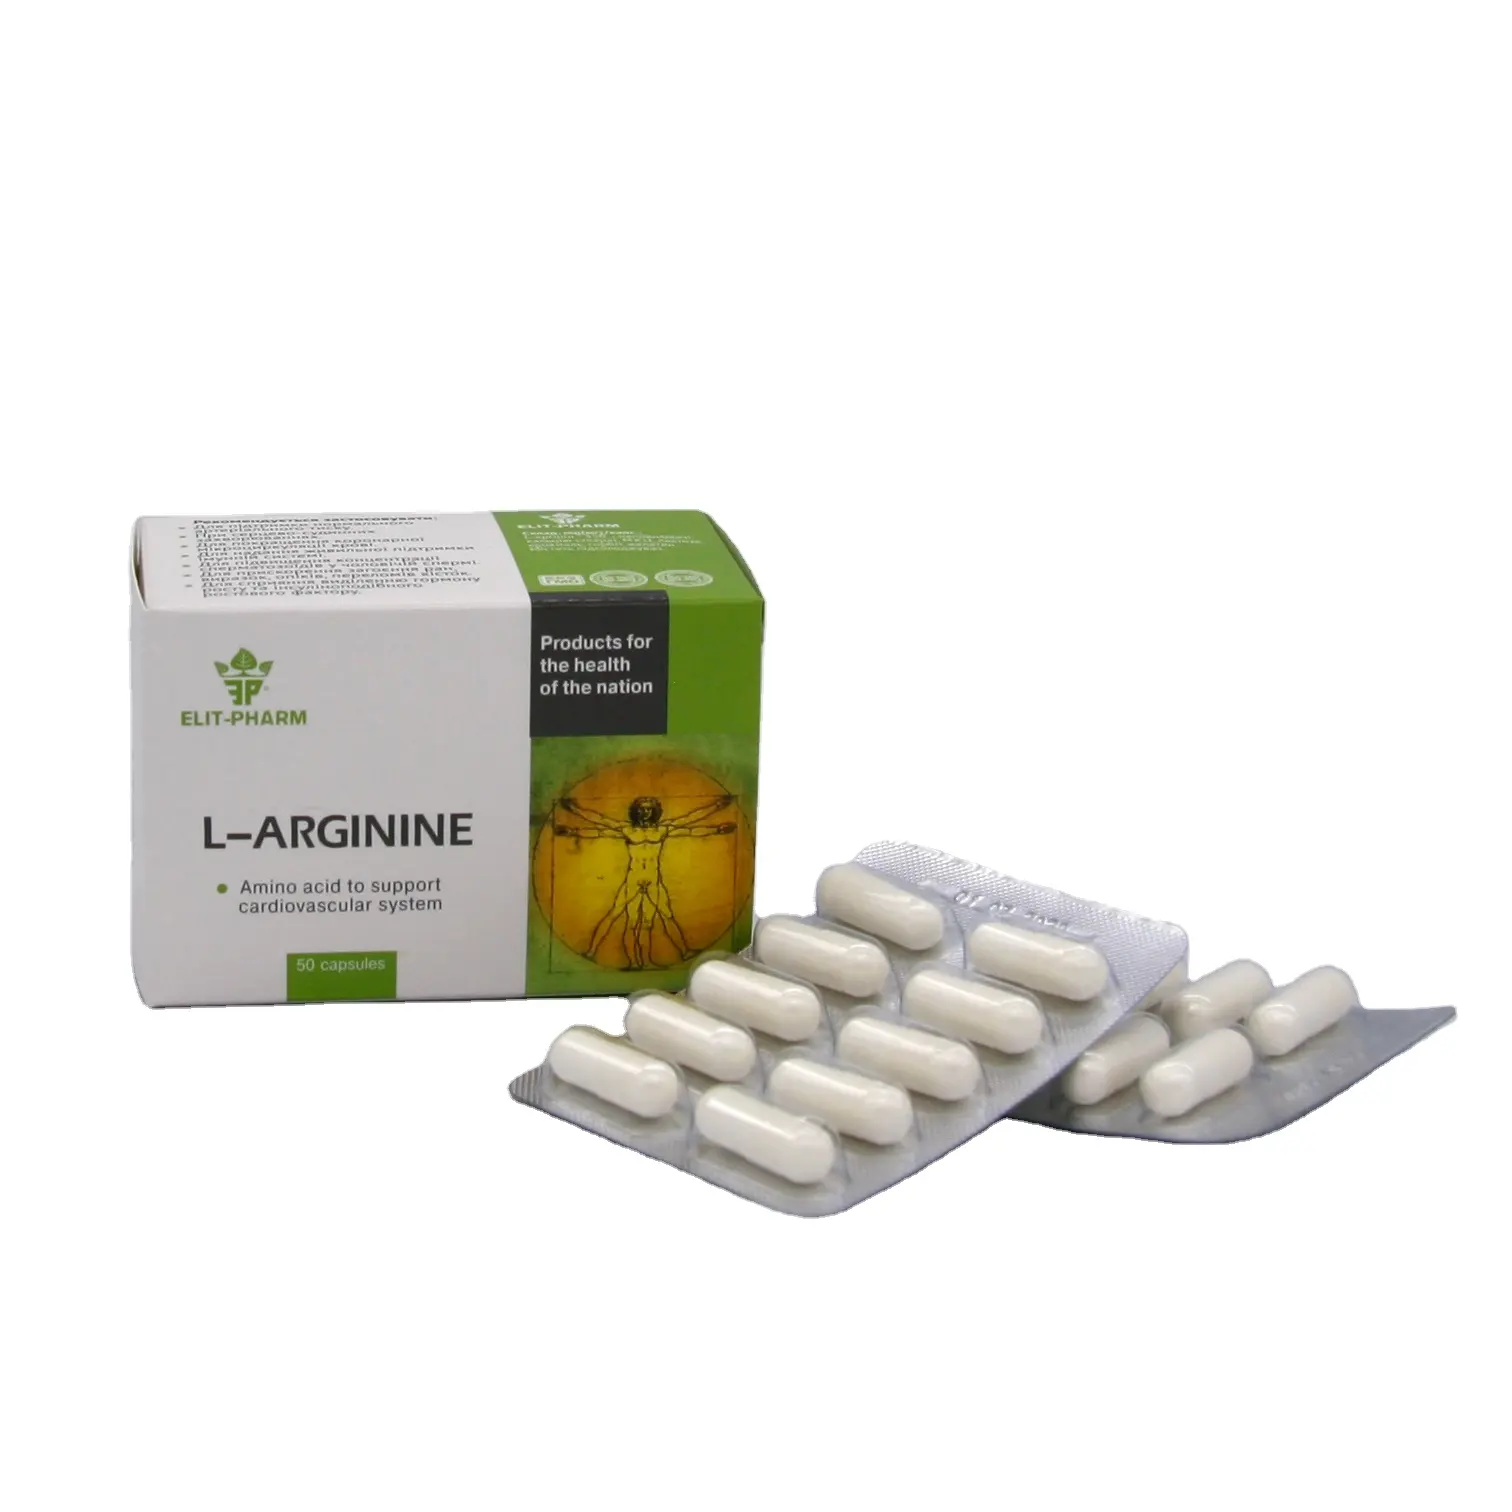 Wholesale Supplier of L-Arginine 350 mg Amino Acid Capsules to Improve Cardiovascular system